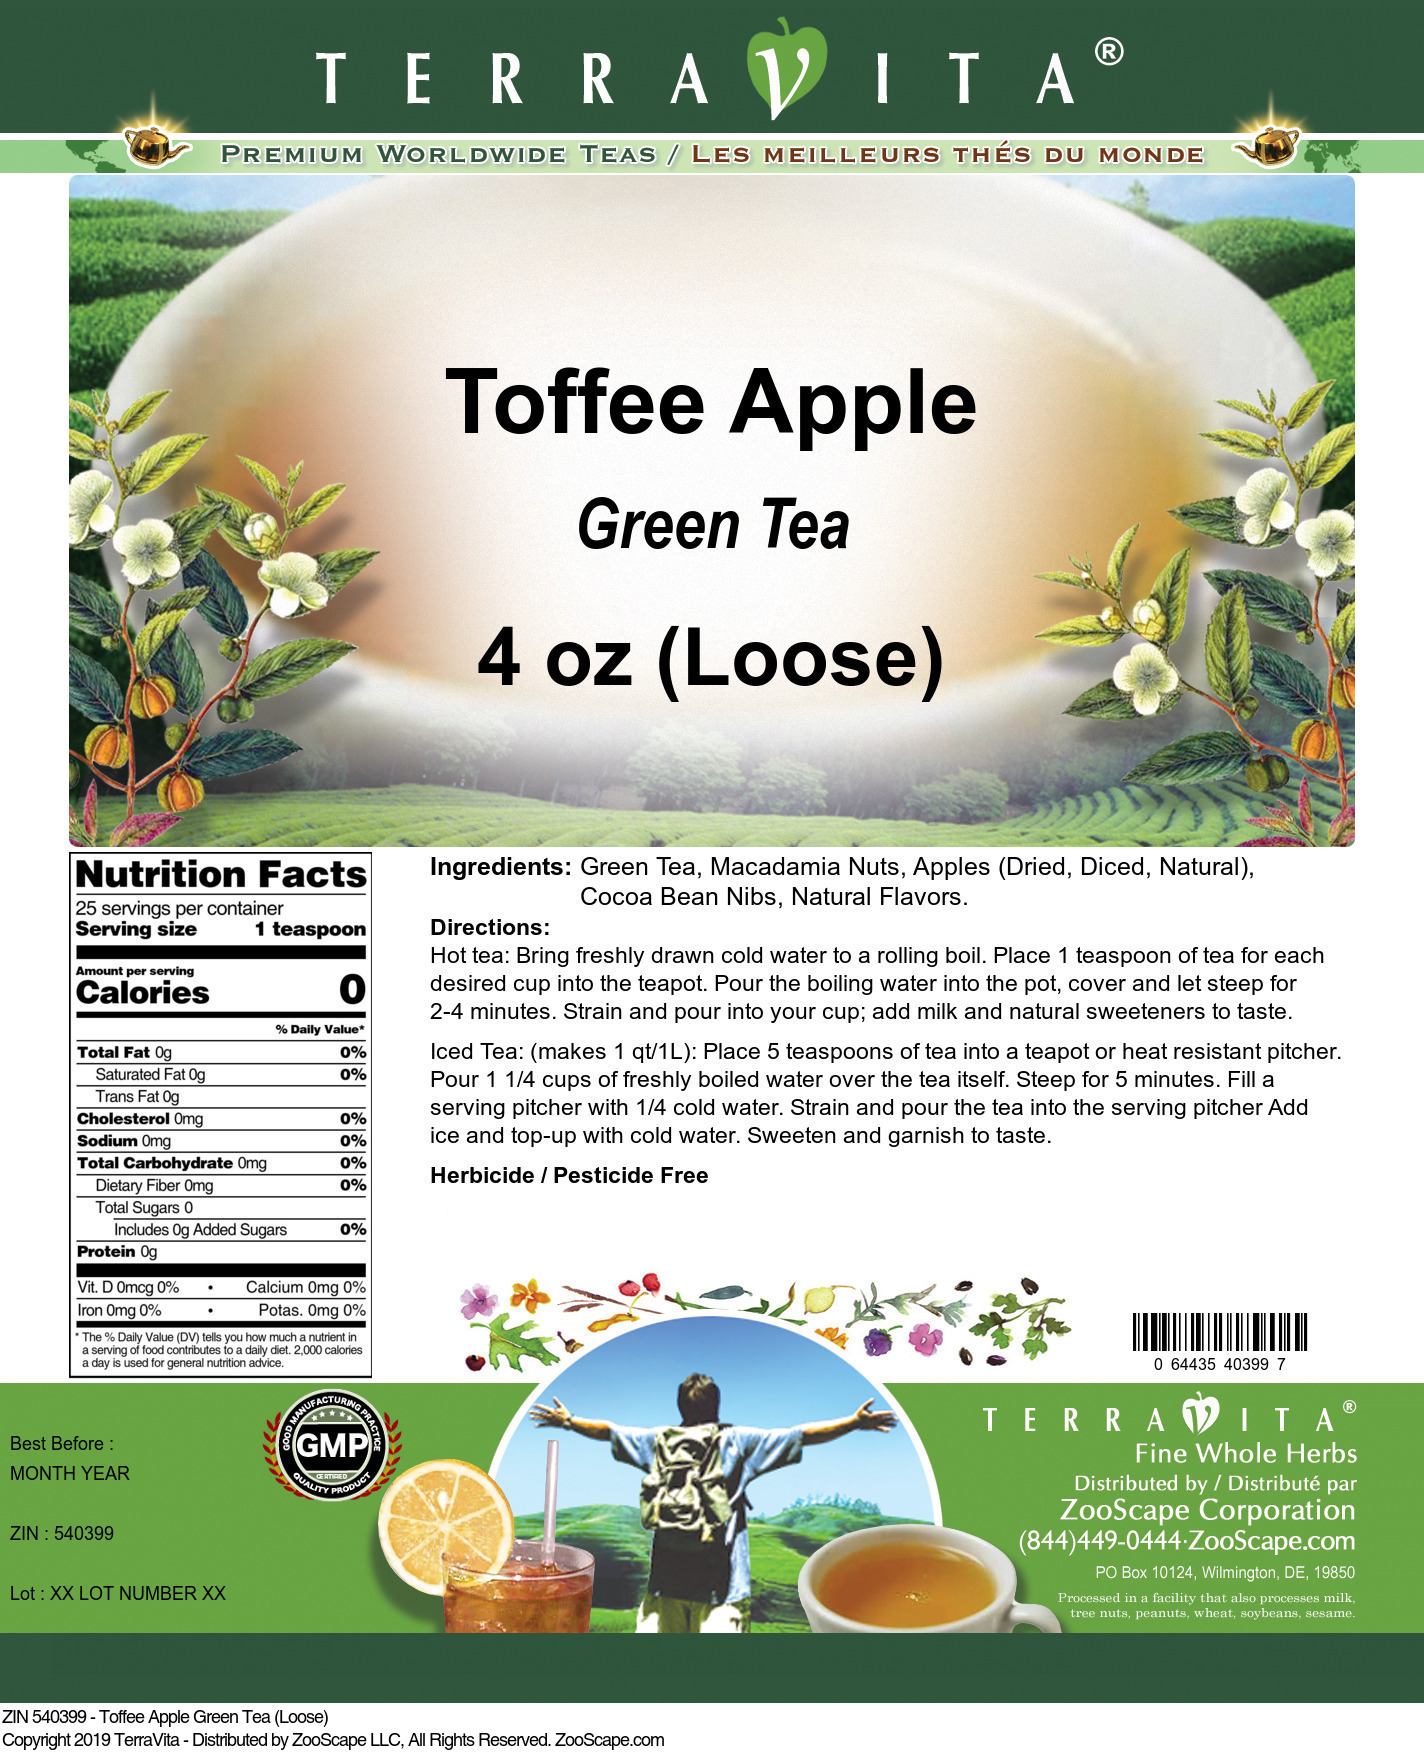 Toffee Apple Green Tea (Loose) - Label